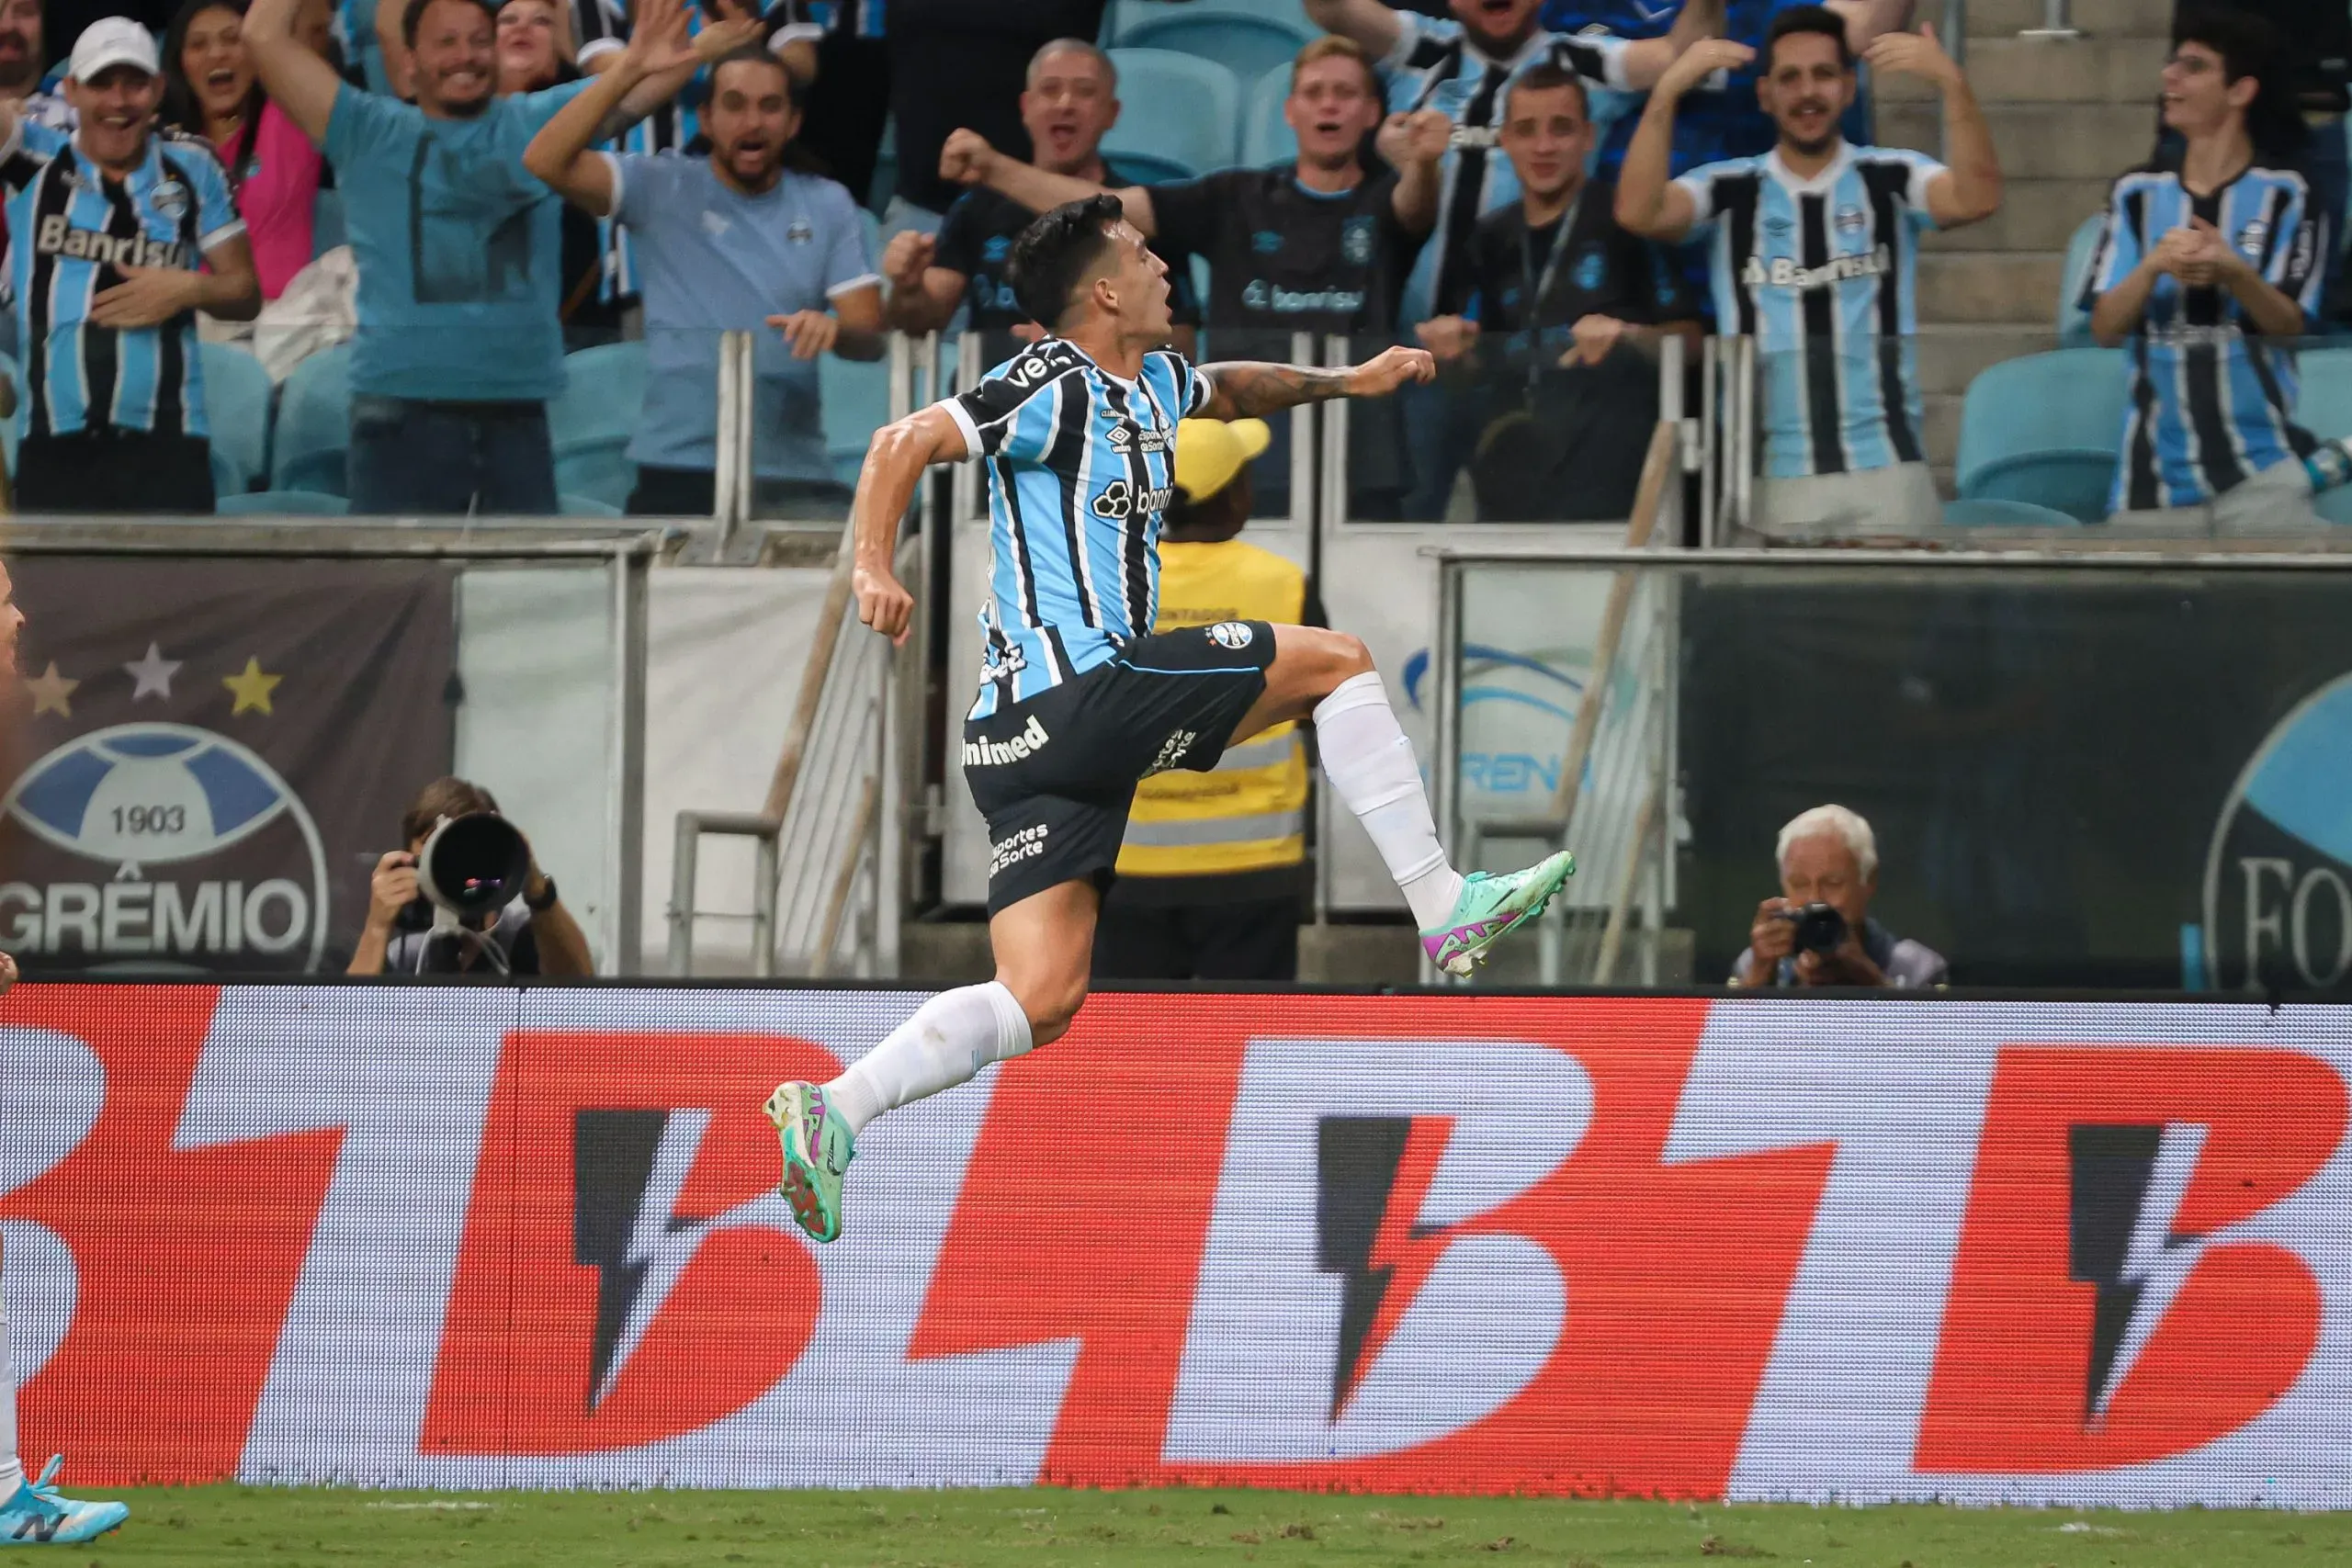 Cristaldo comemora gol contra o Cuiabá na Arena do Grêmio. Foto: Maxi Franzoi/AGIF